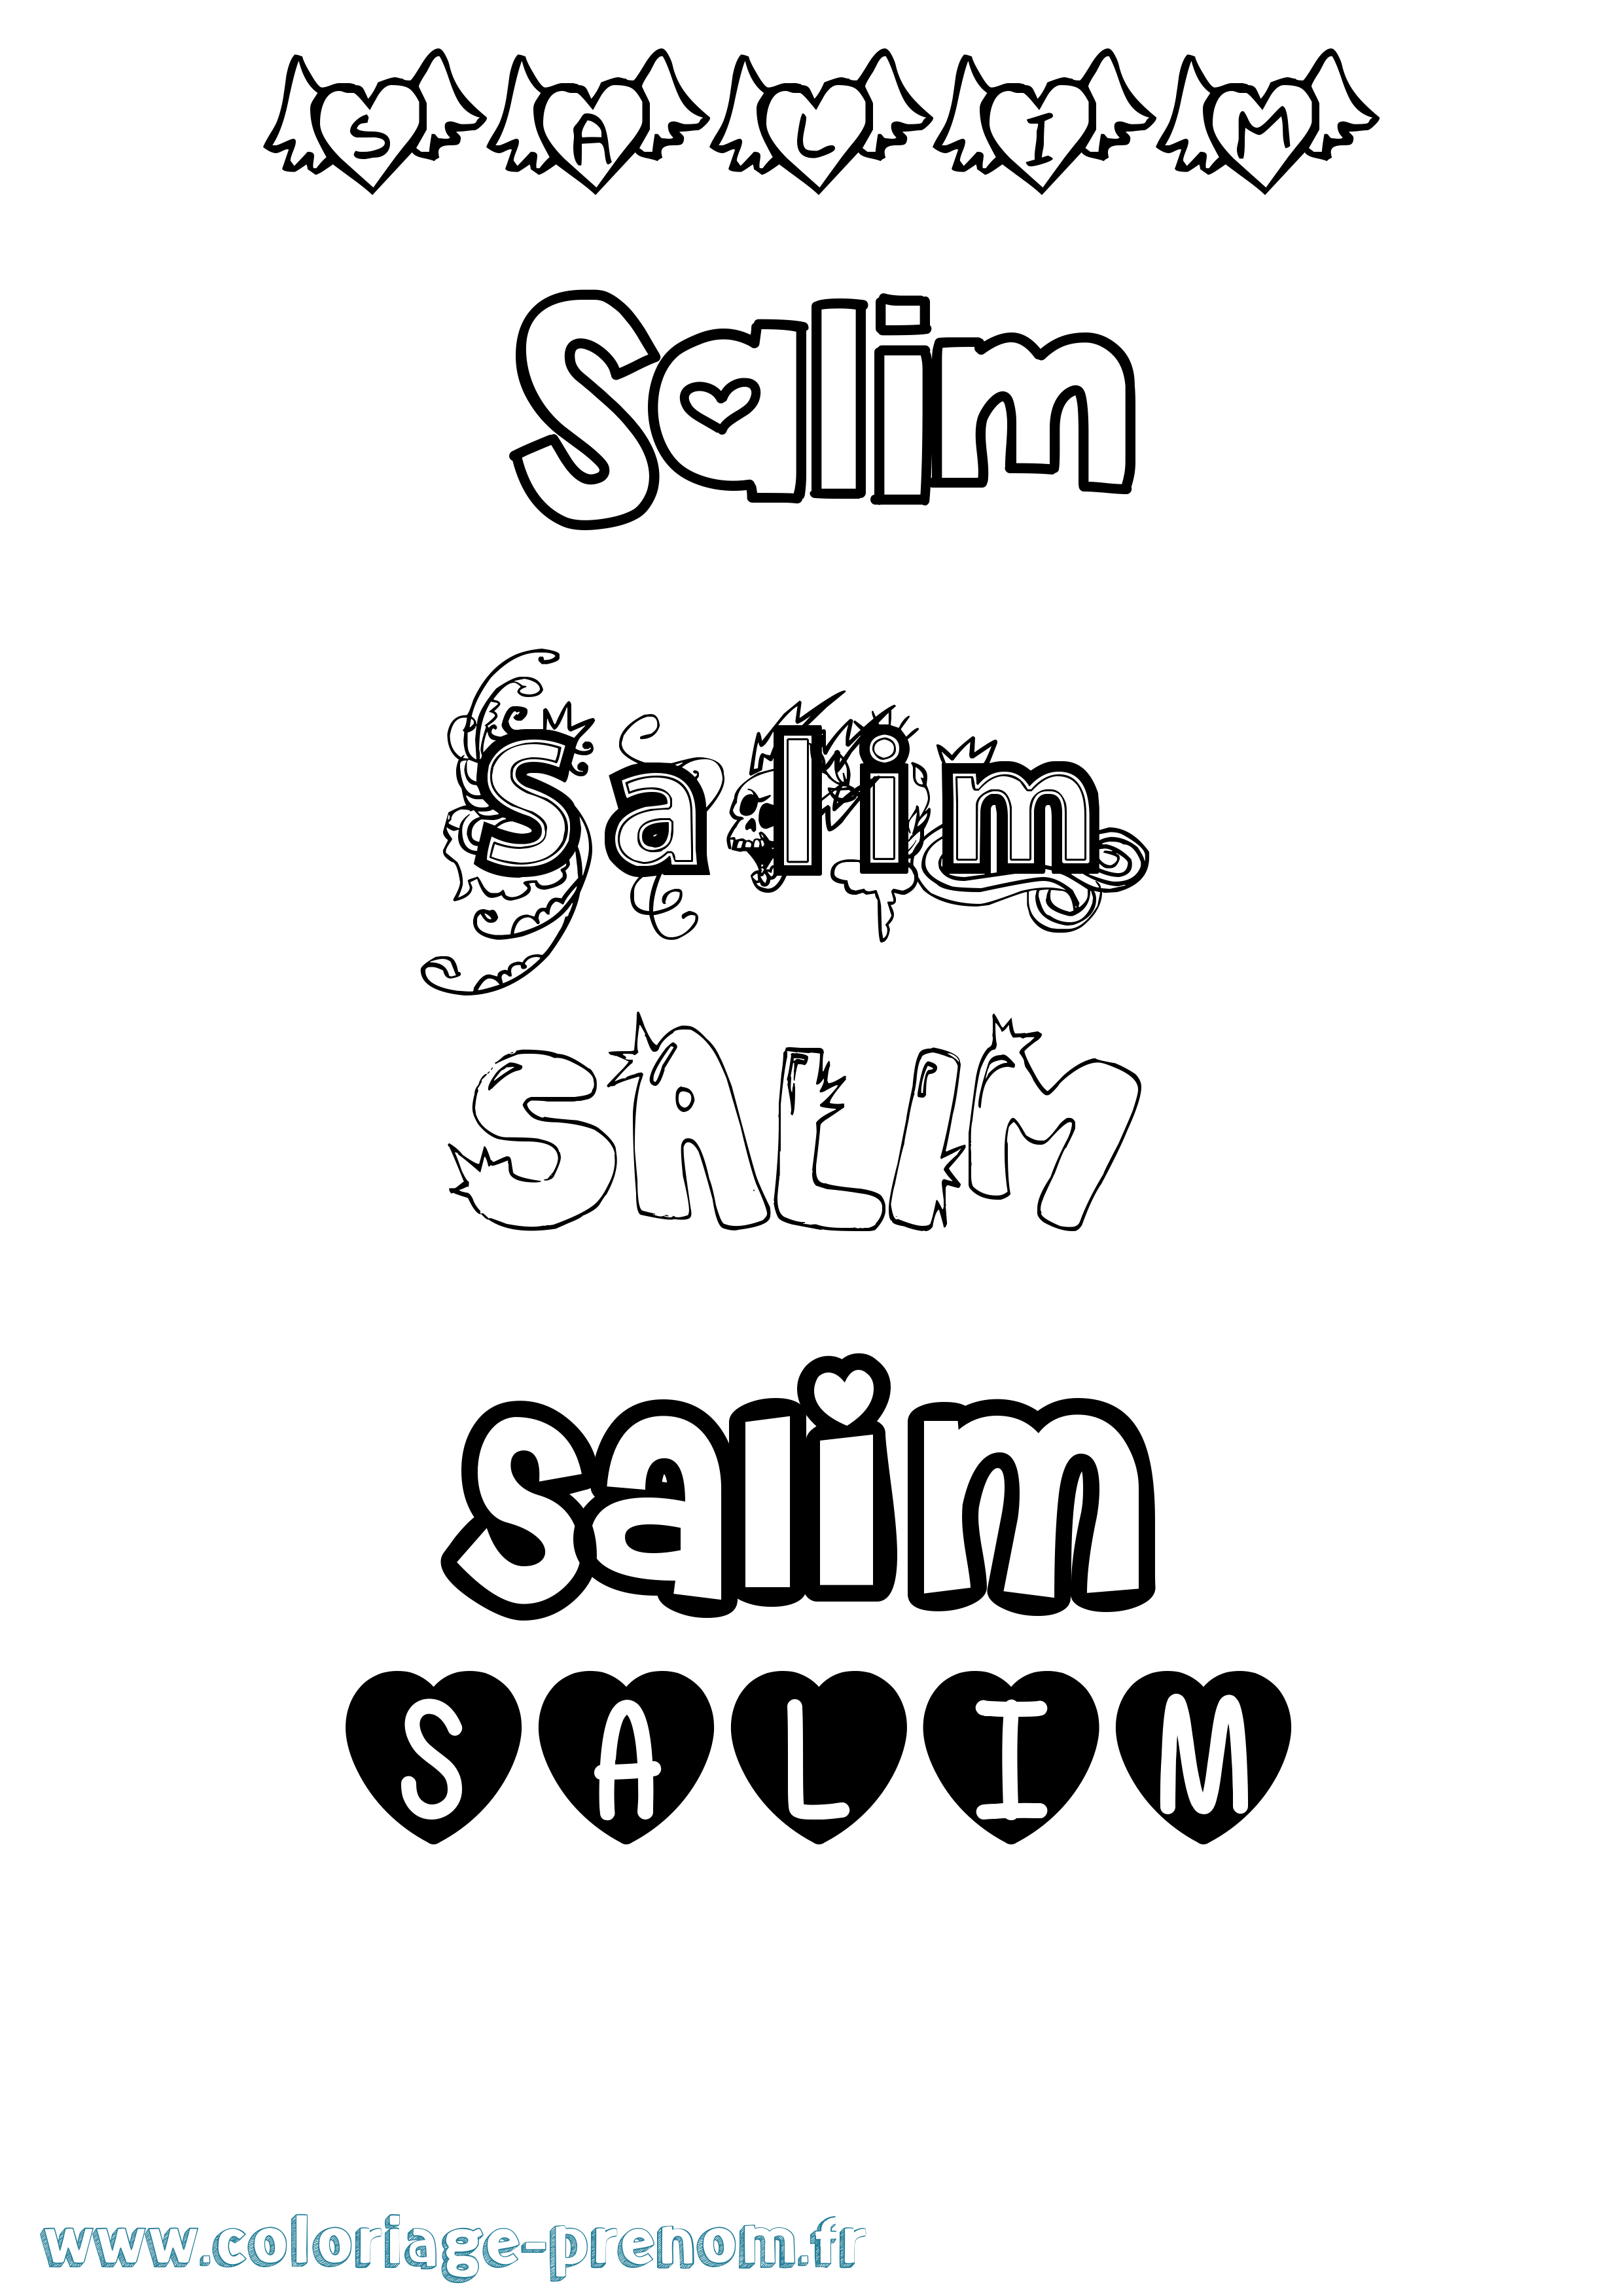 Coloriage prénom Salim